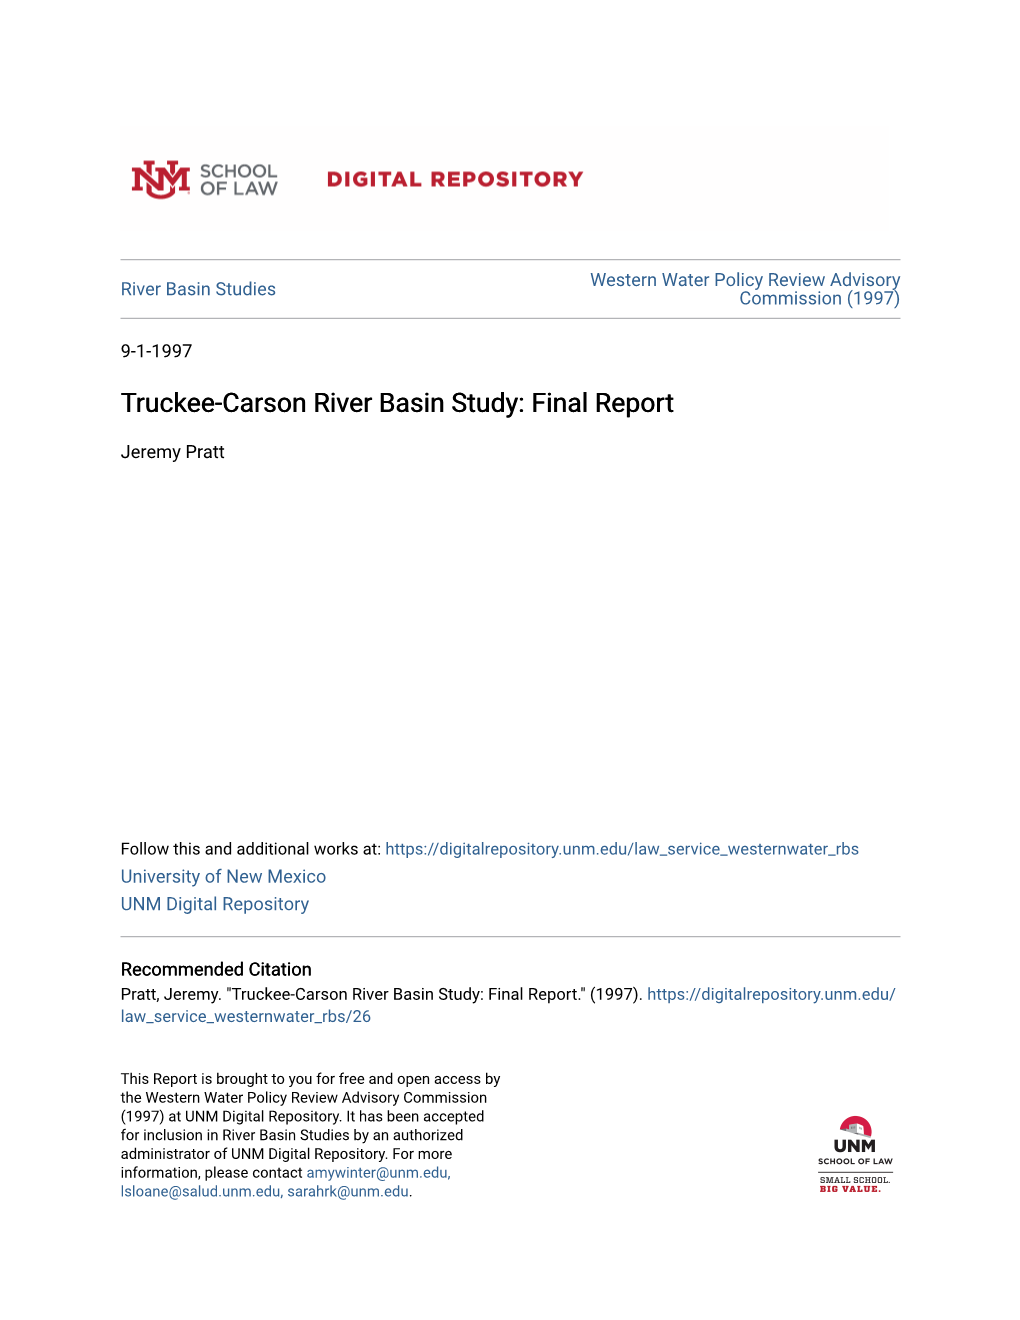 Truckee-Carson River Basin Study: Final Report